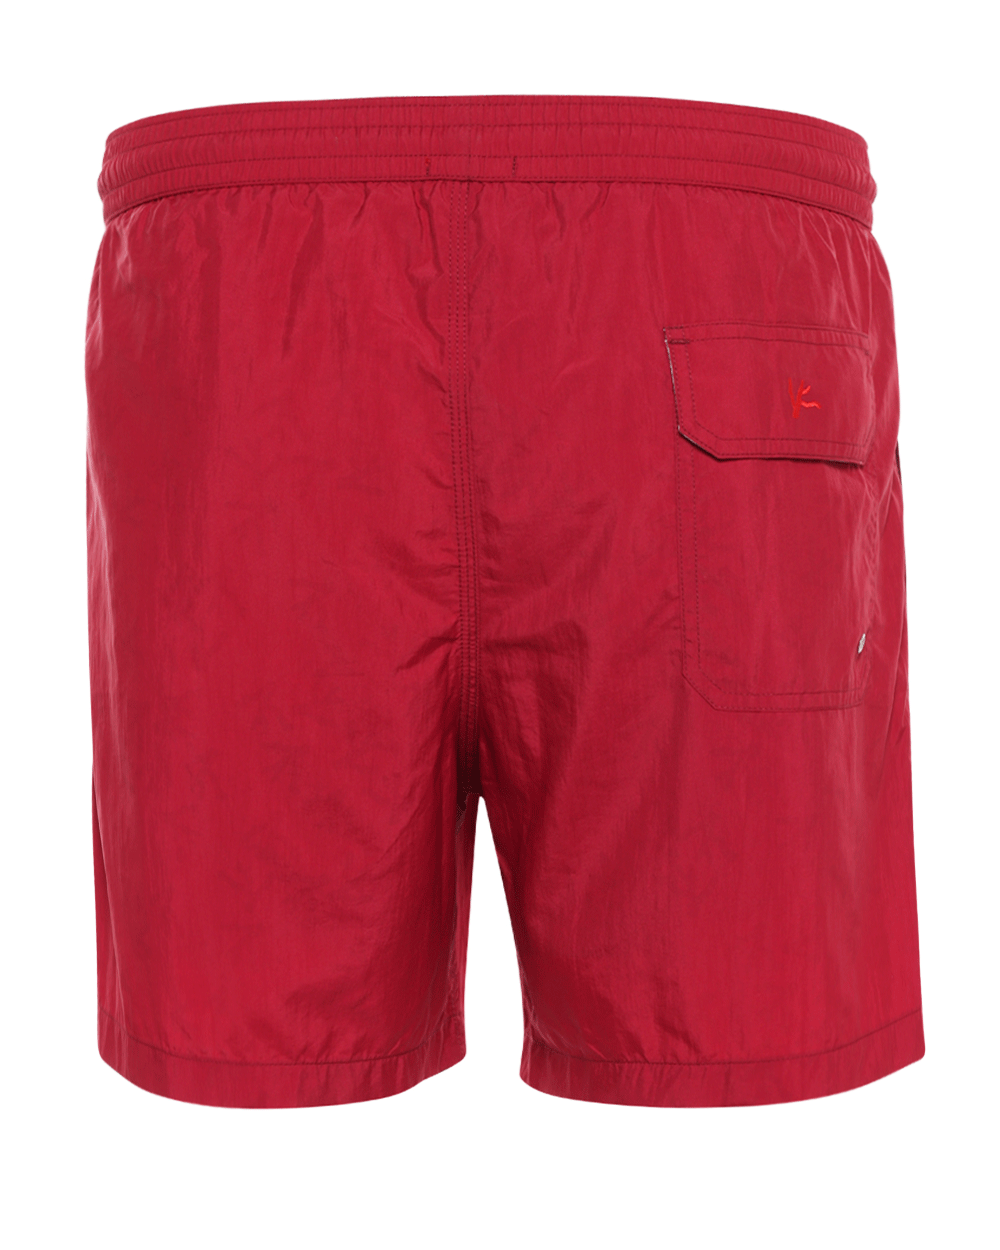 Solid Red Swim Short